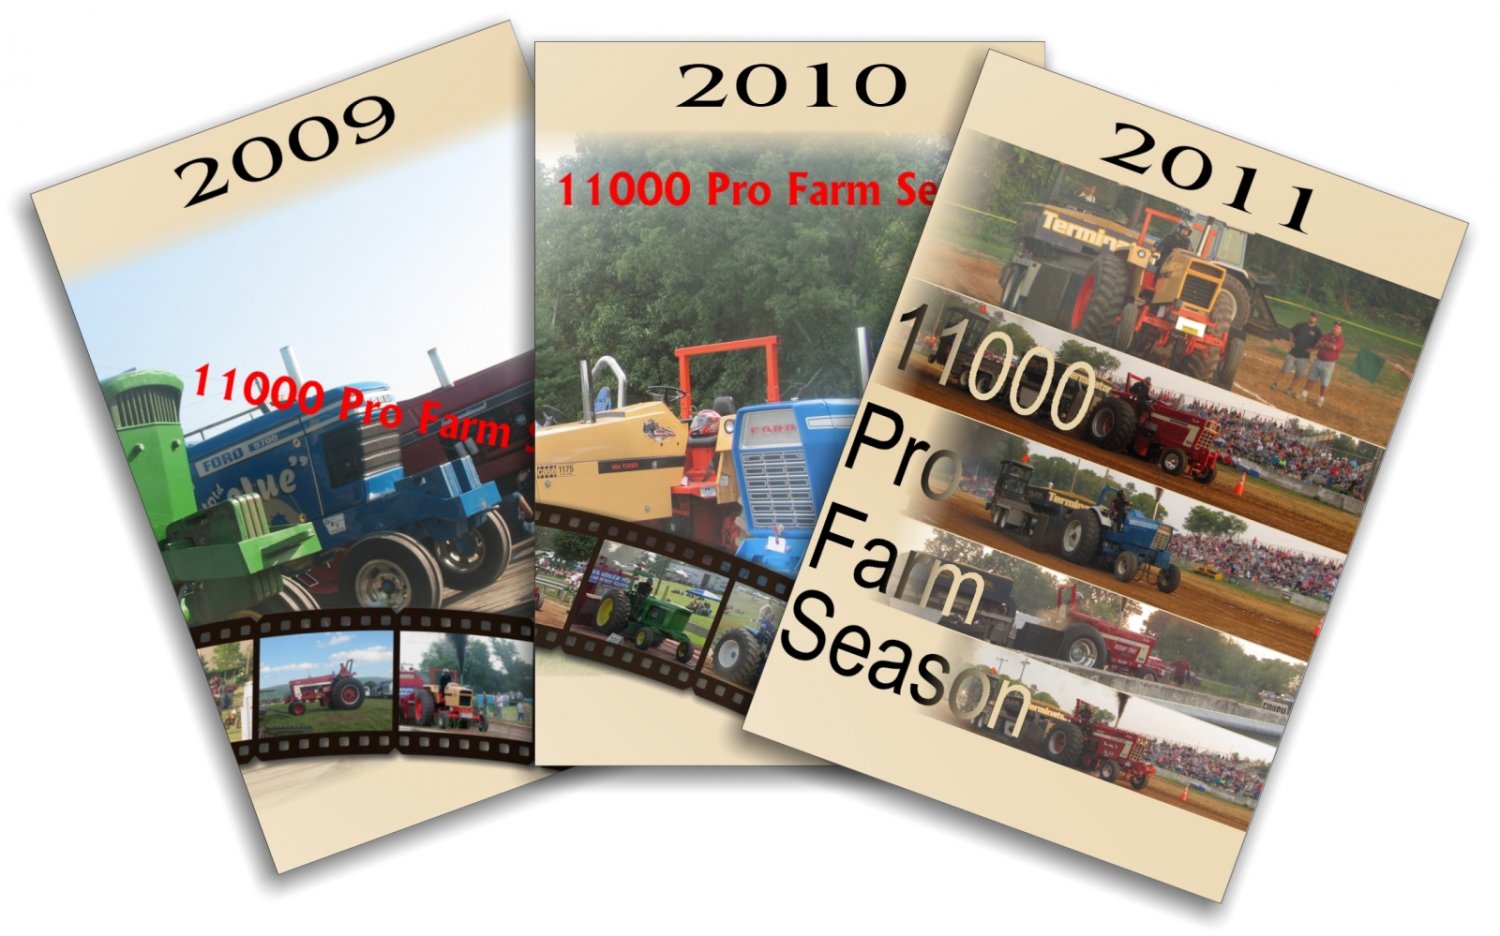 SET 3 DVDs 2009 2010 2011 11000 Pro Farm Season Tractor Pull